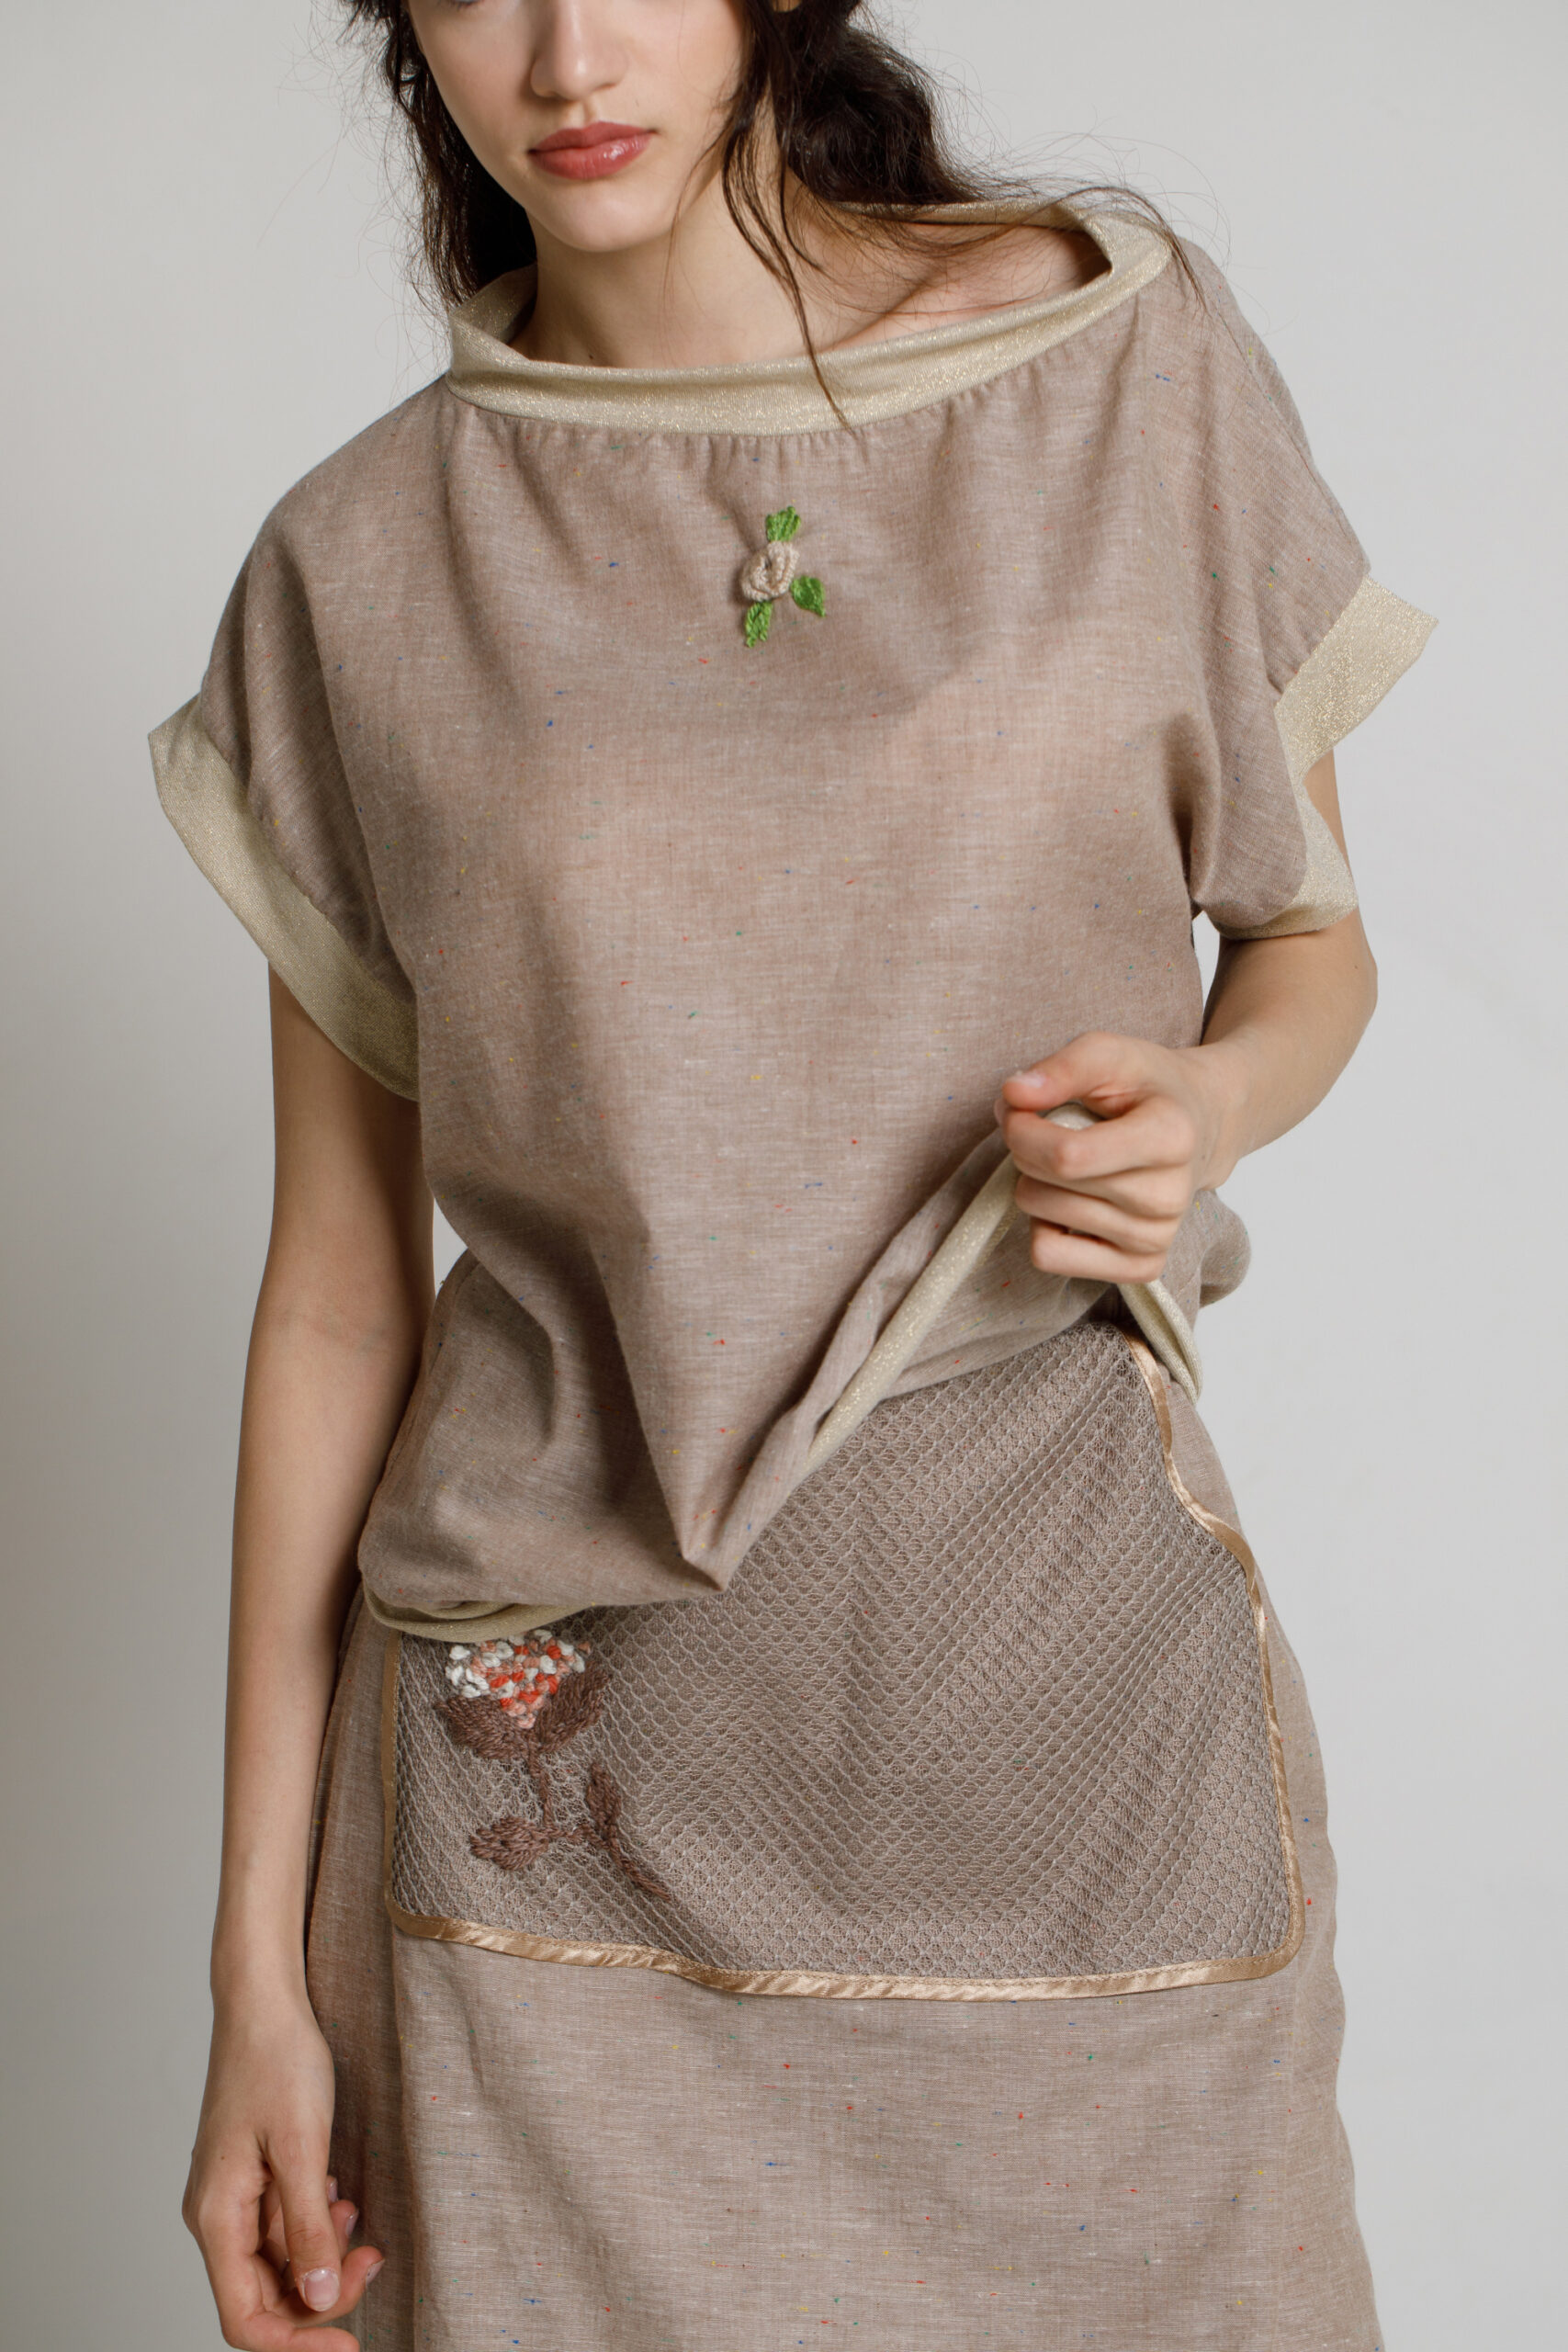 DEBRA casual poplin and jersey blouse. Natural fabrics, original design, handmade embroidery